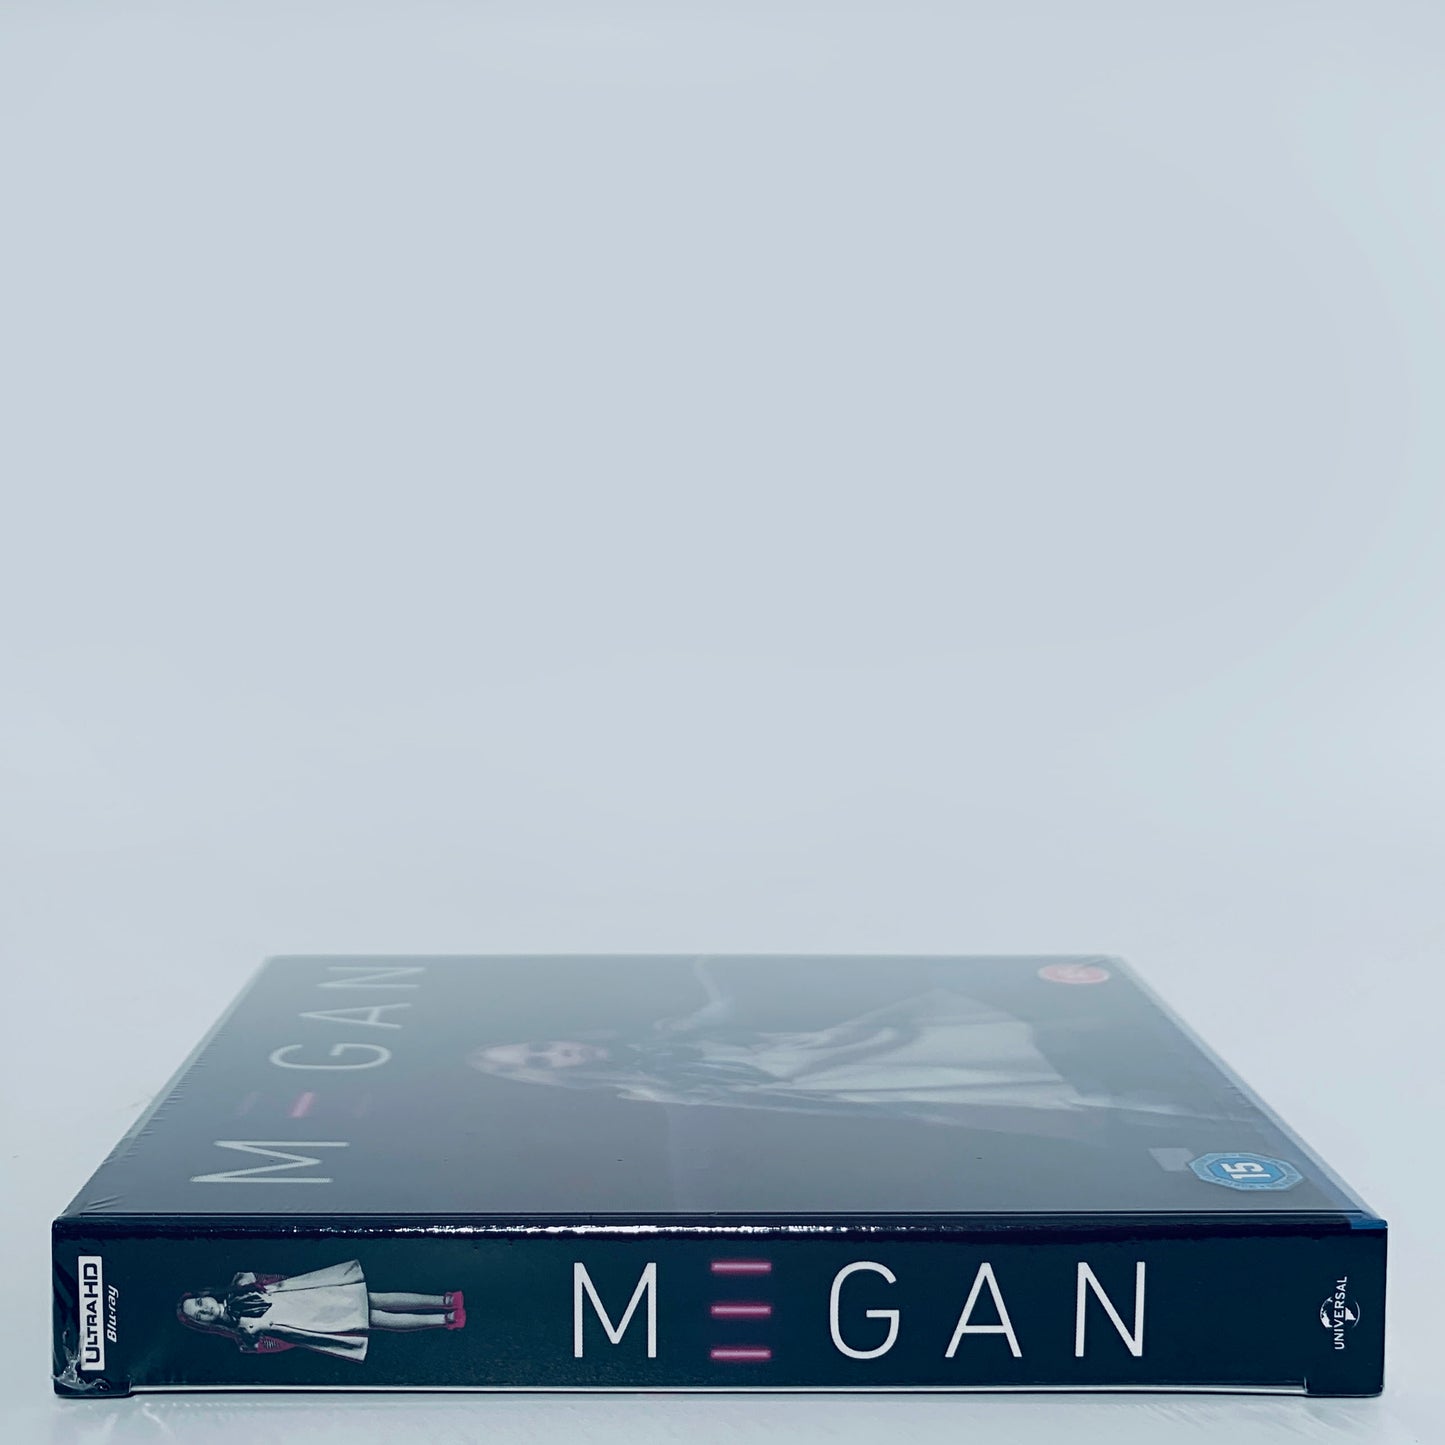 Megan M3GAN horror UHD 4K Limited Edition SteelBook Ultra HD Blu-ray